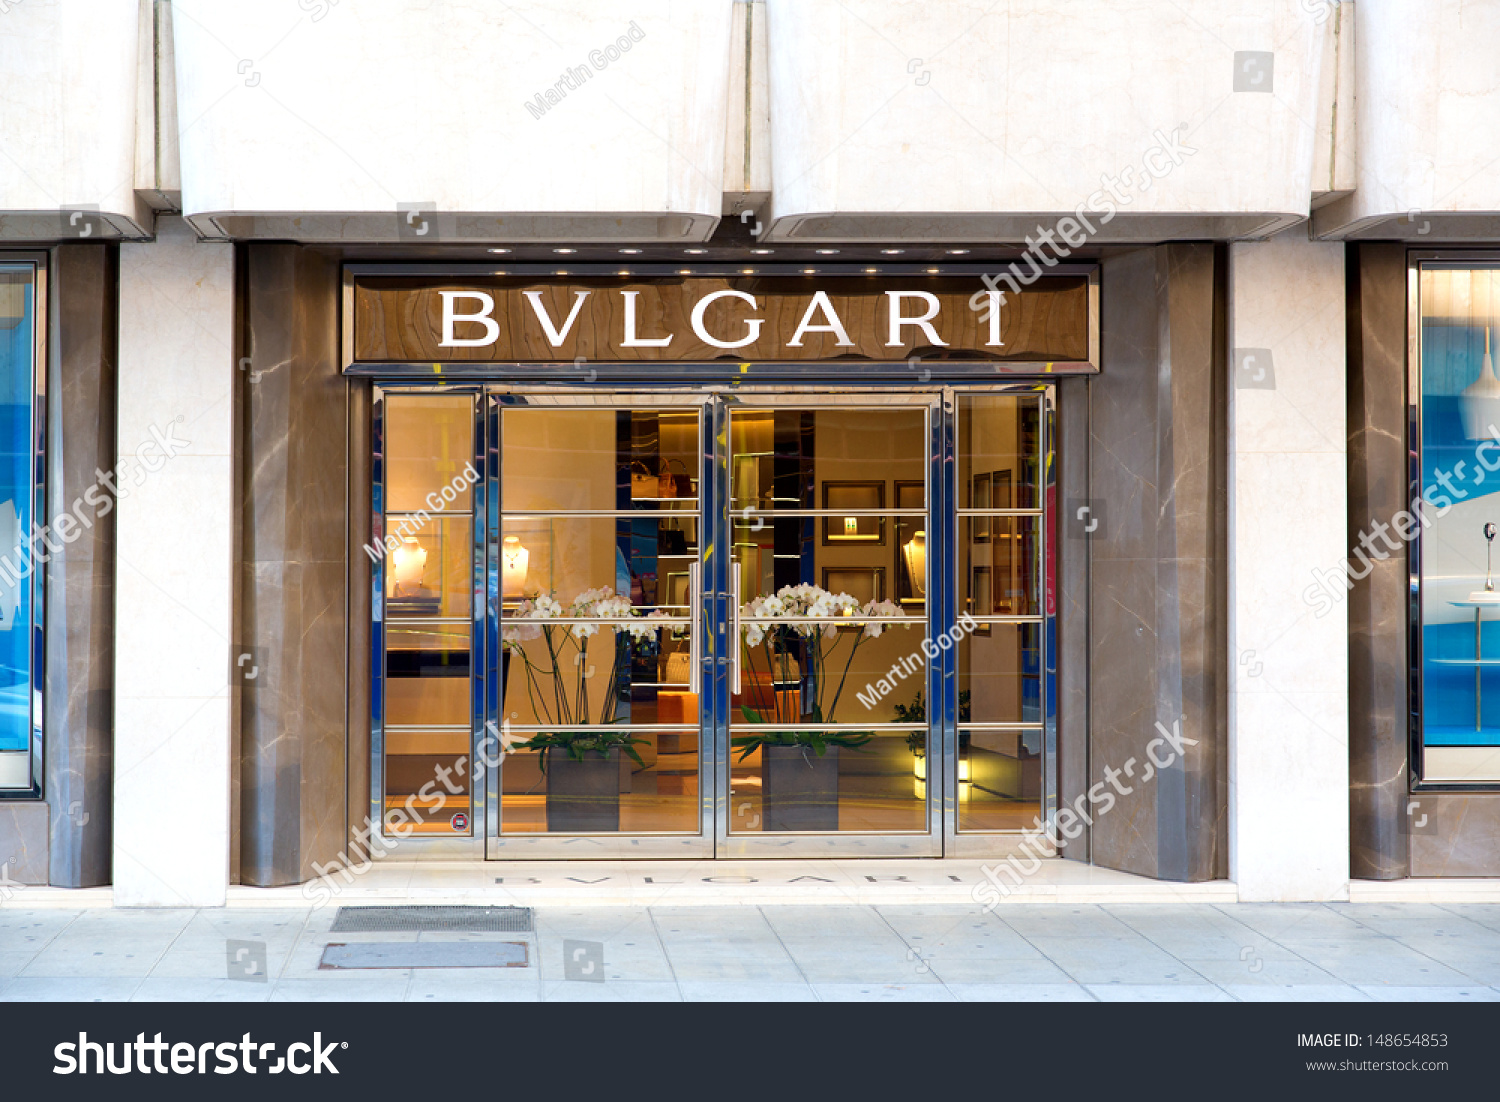 who owns bvlgari